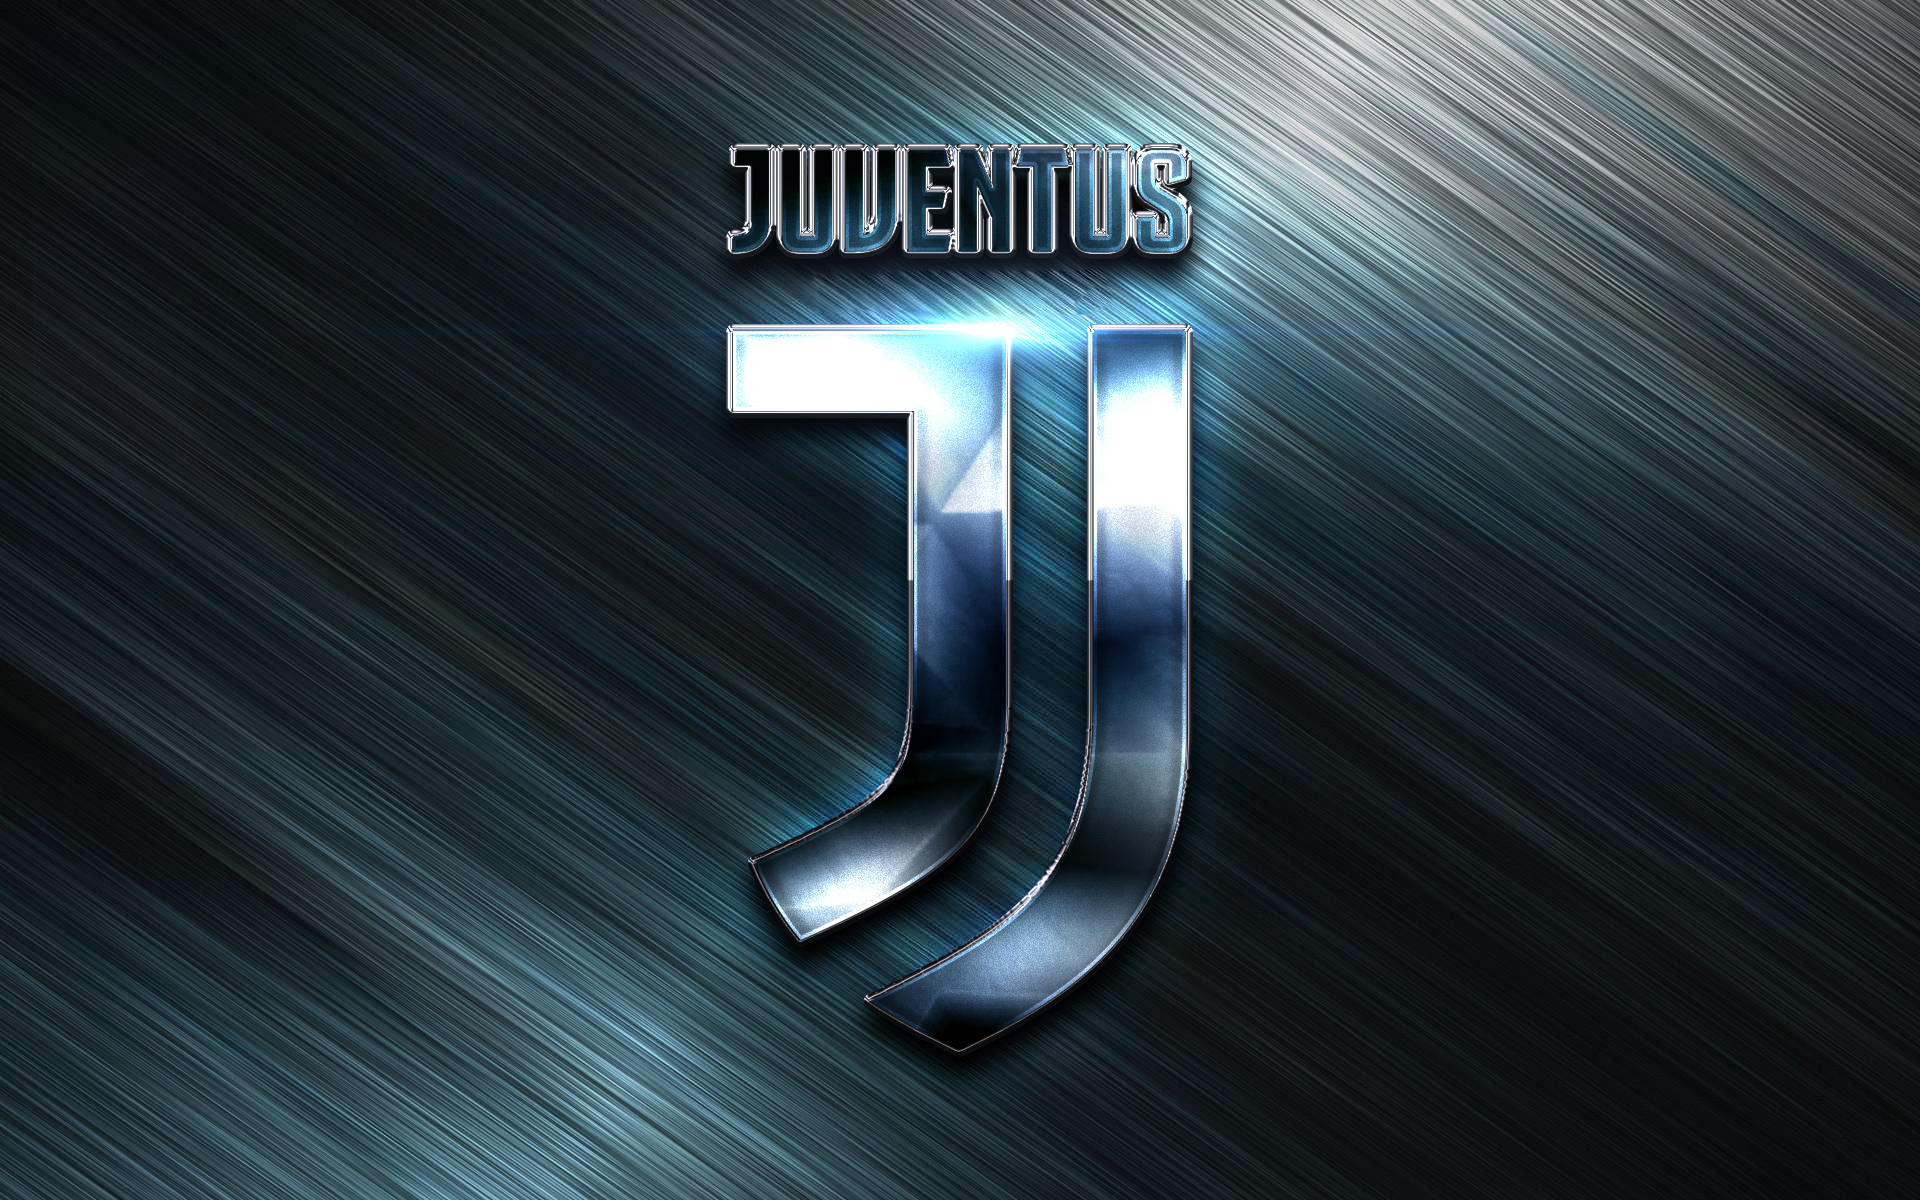 juventus f c, sports, emblem, logo, soccer